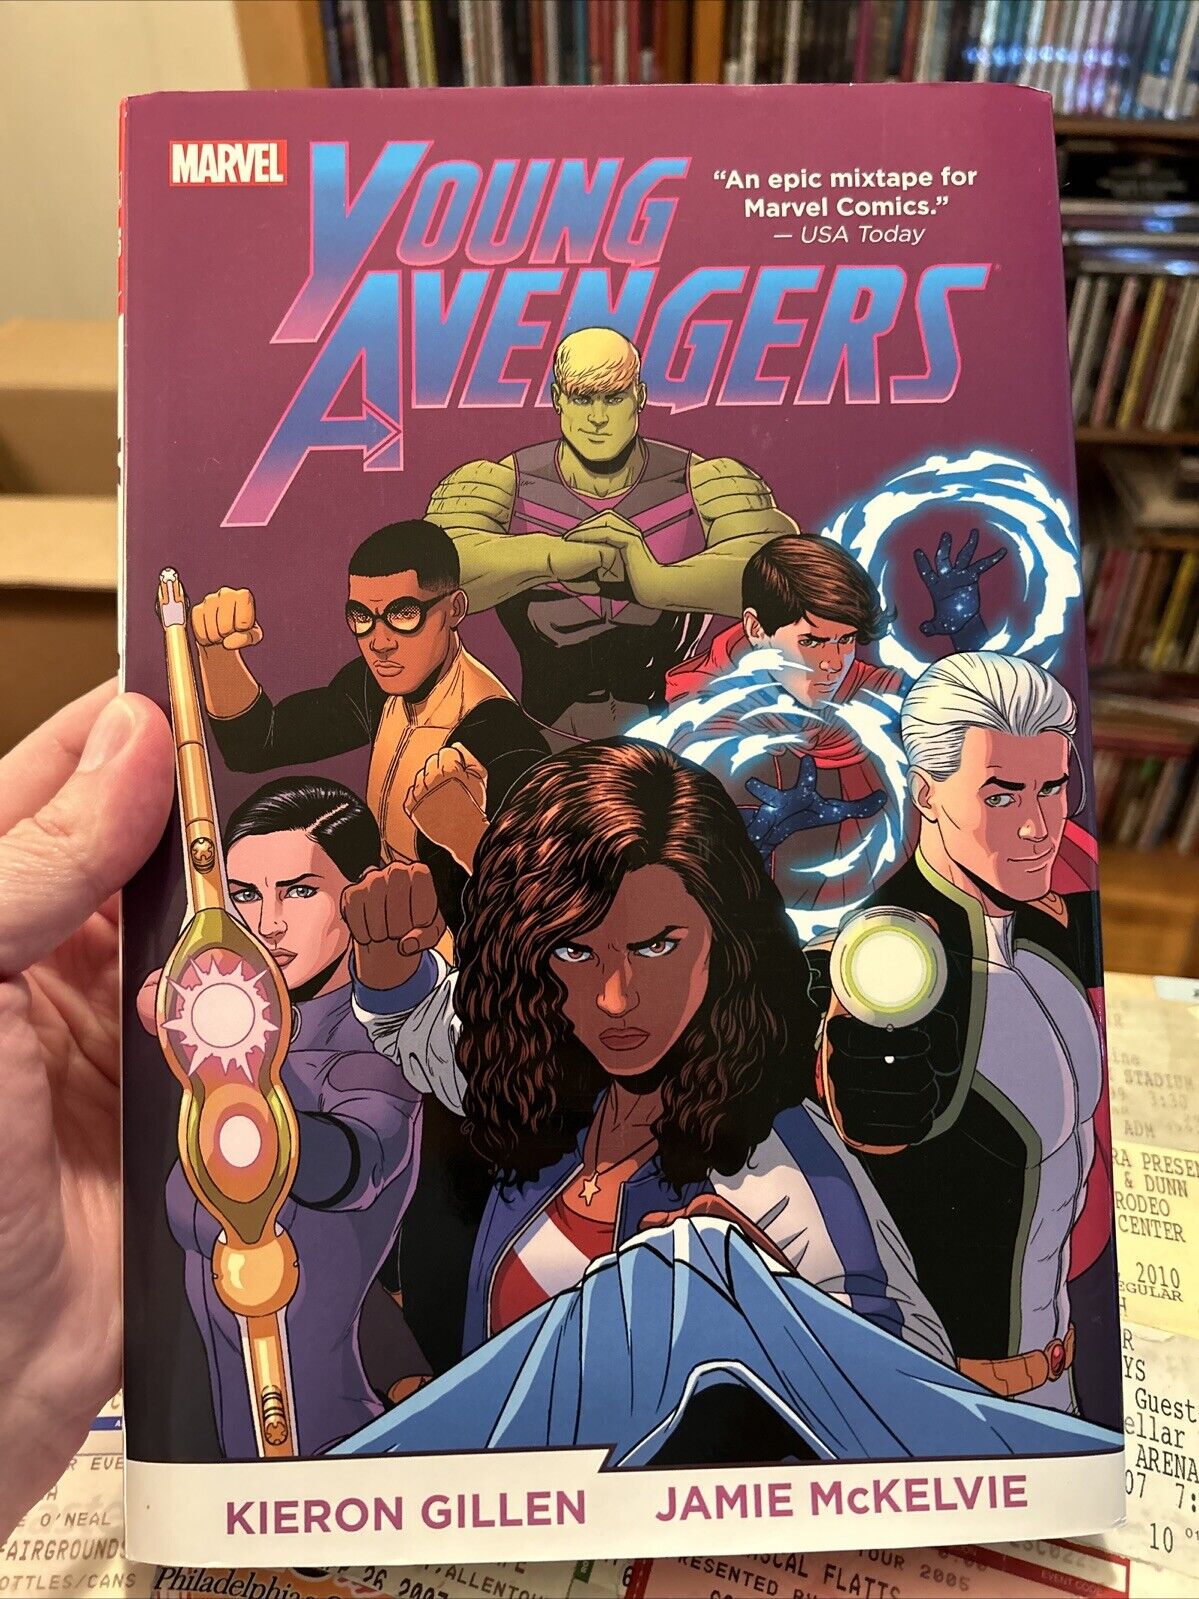 Young Avengers by Kieron Gillen & Jamie McKelvie Omnibus (Marvel, 2021) Read AD